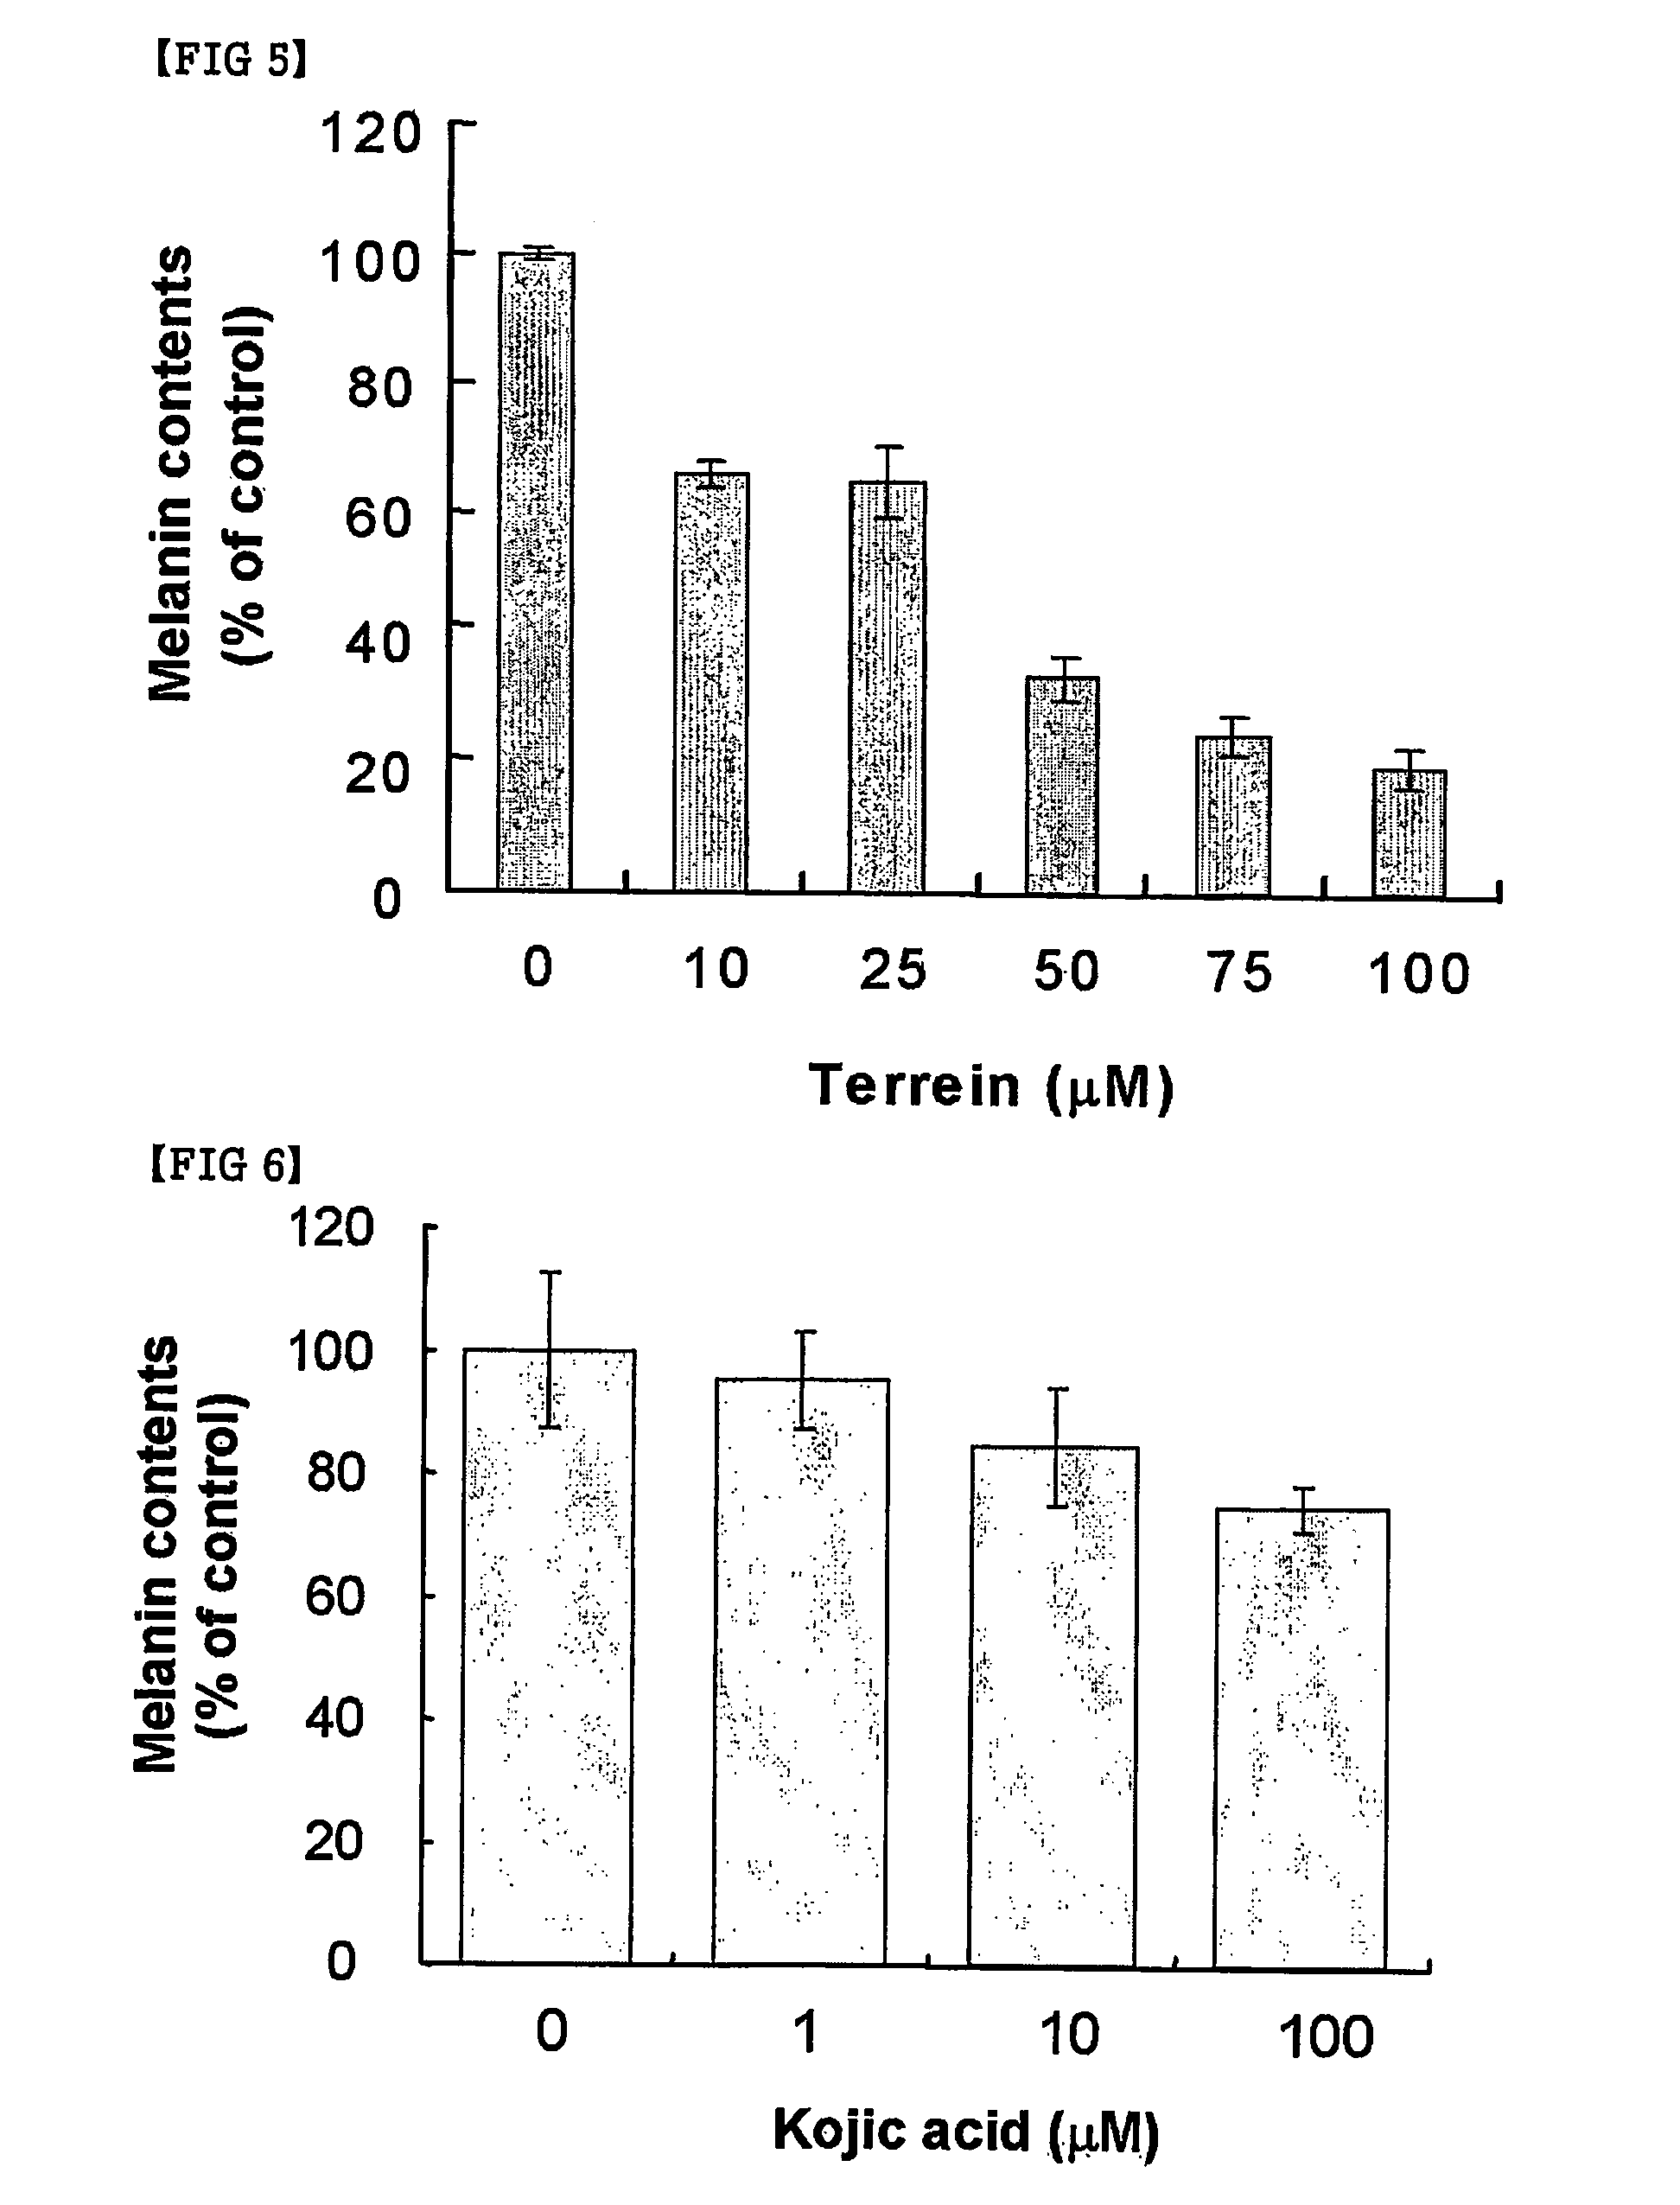 Terrein compound having melanin biosynthesis inhibitors and its preparation